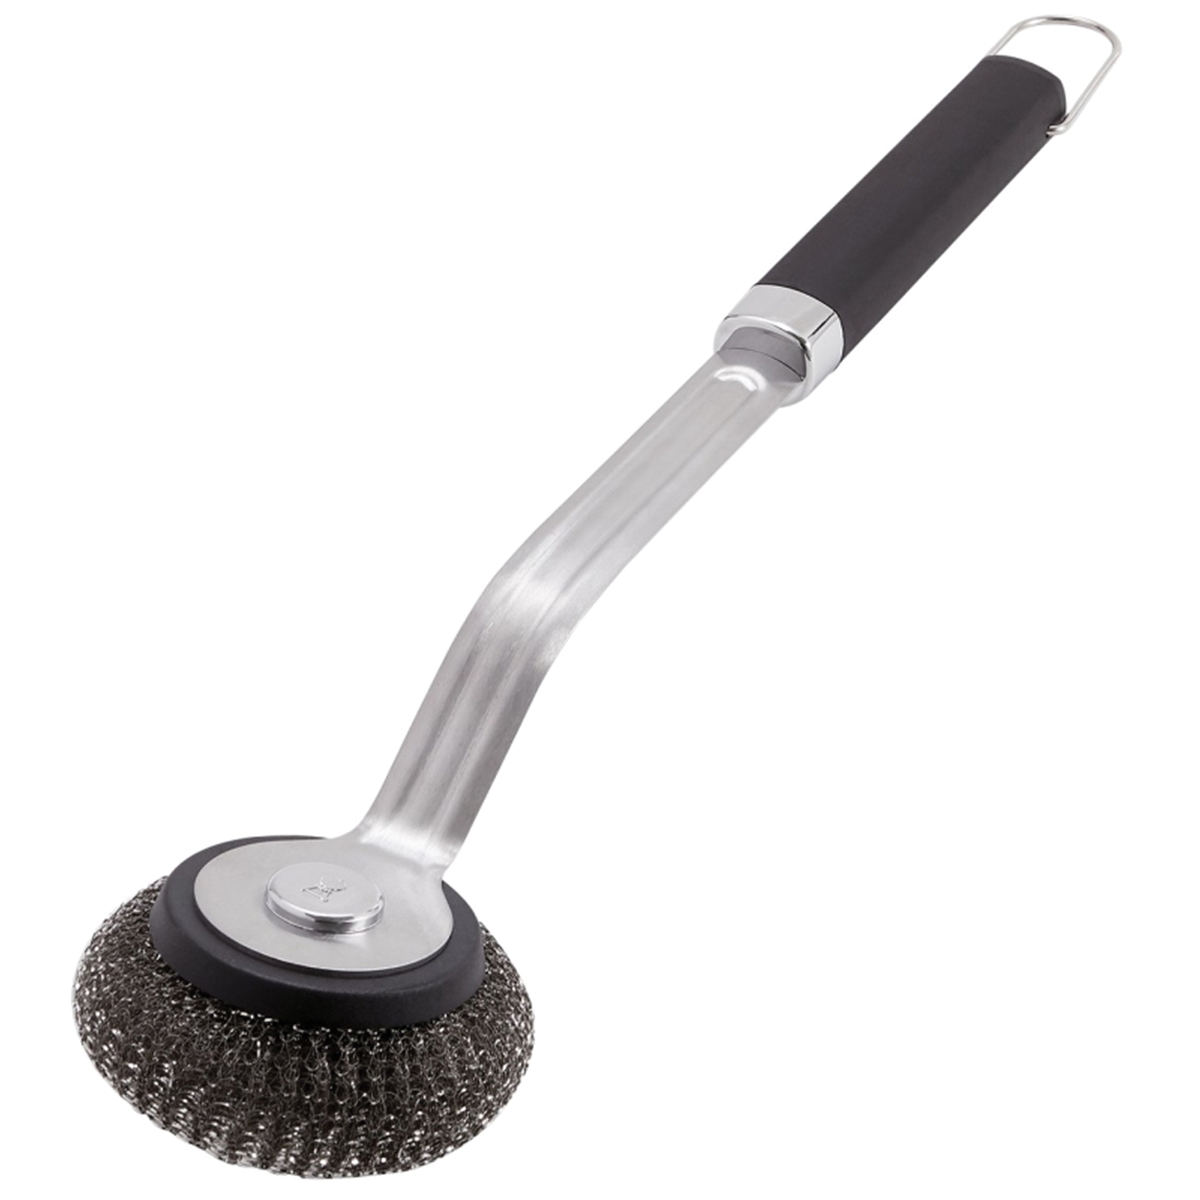 6283 Scrub Grill Brush, 3 in L Brush, 3 in W Brush, Plastic Handle, Non-Slip Grip, Soft-Touch Handle, 18 in L